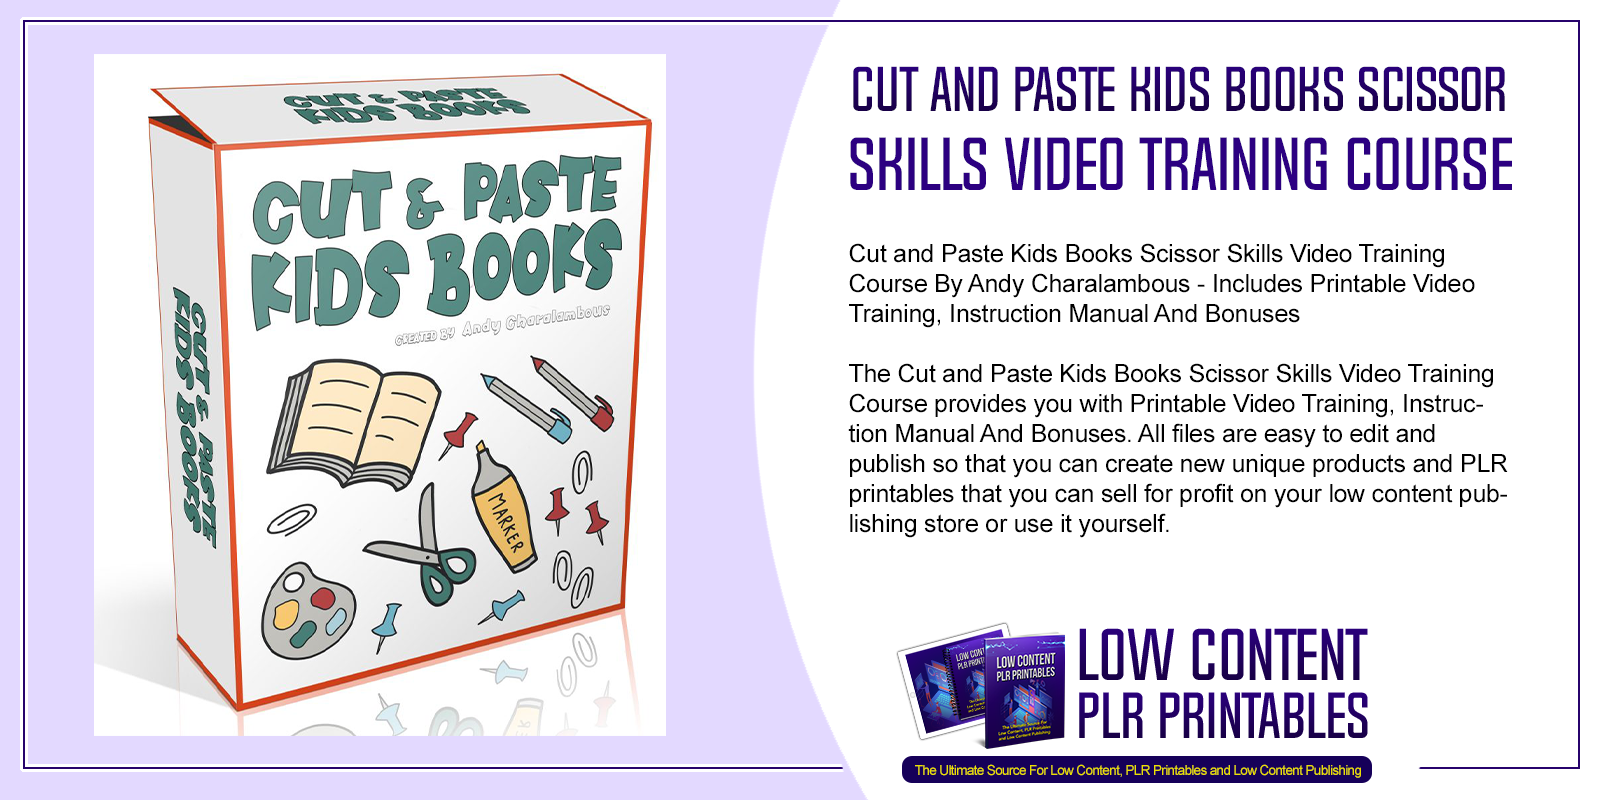 Cut and Paste Kids Books Scissor Skills Video Training Course